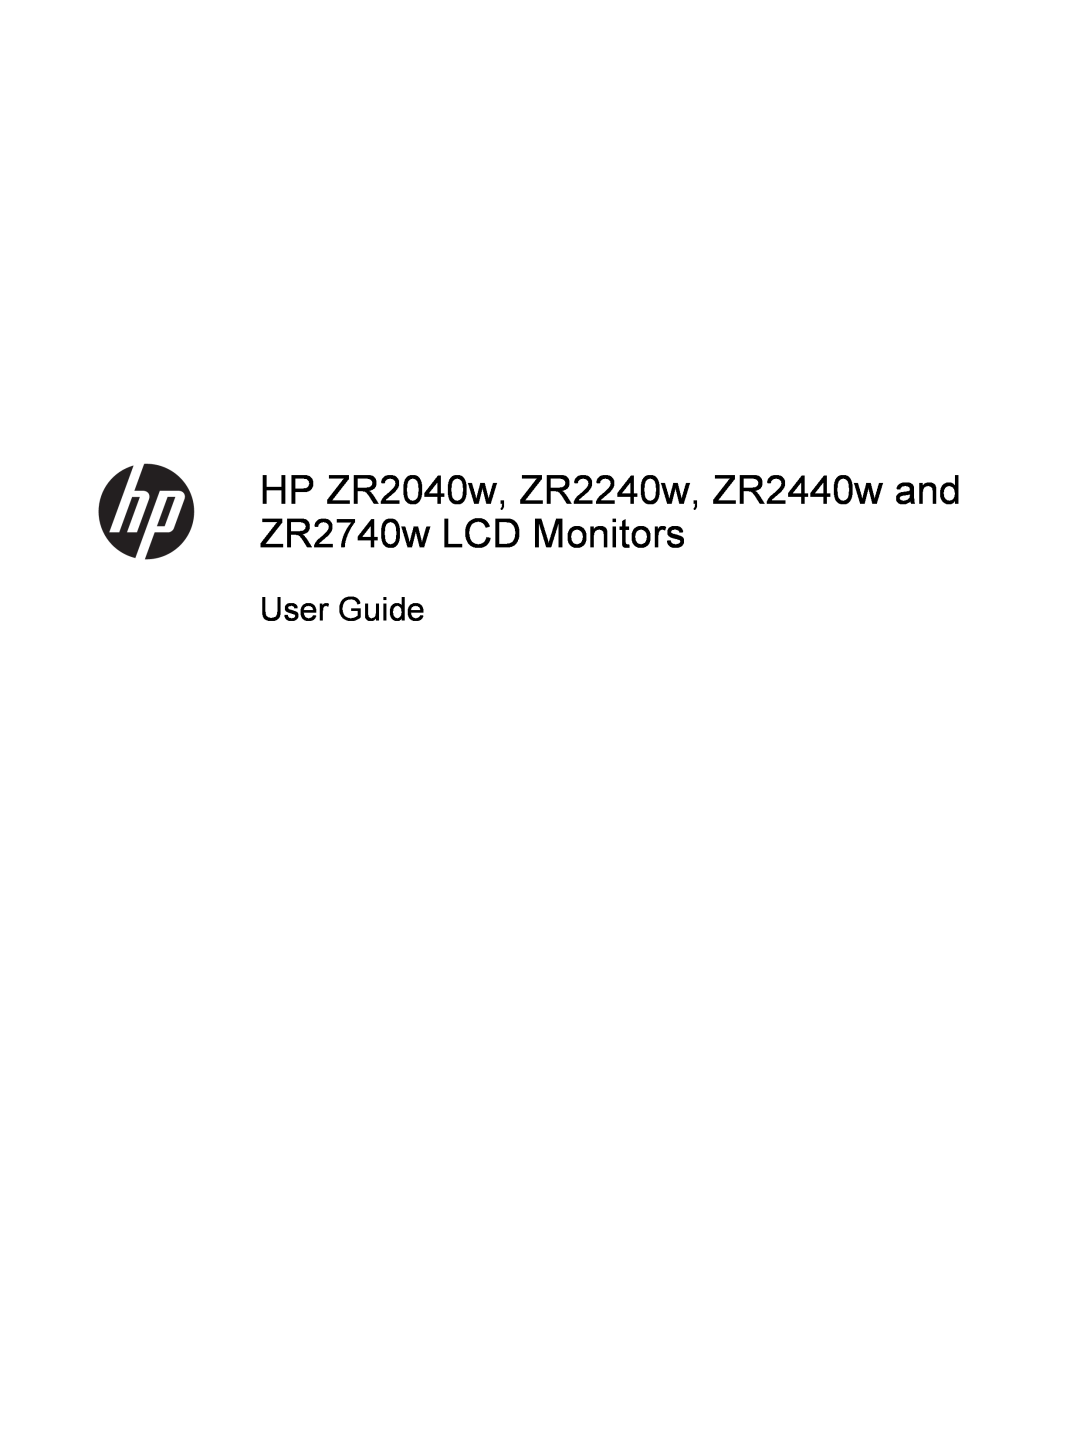 HP ZR2740w 27-inch IPS manual HP ZR2040w, ZR2240w, ZR2440w and ZR2740w LCD Monitors, User Guide 